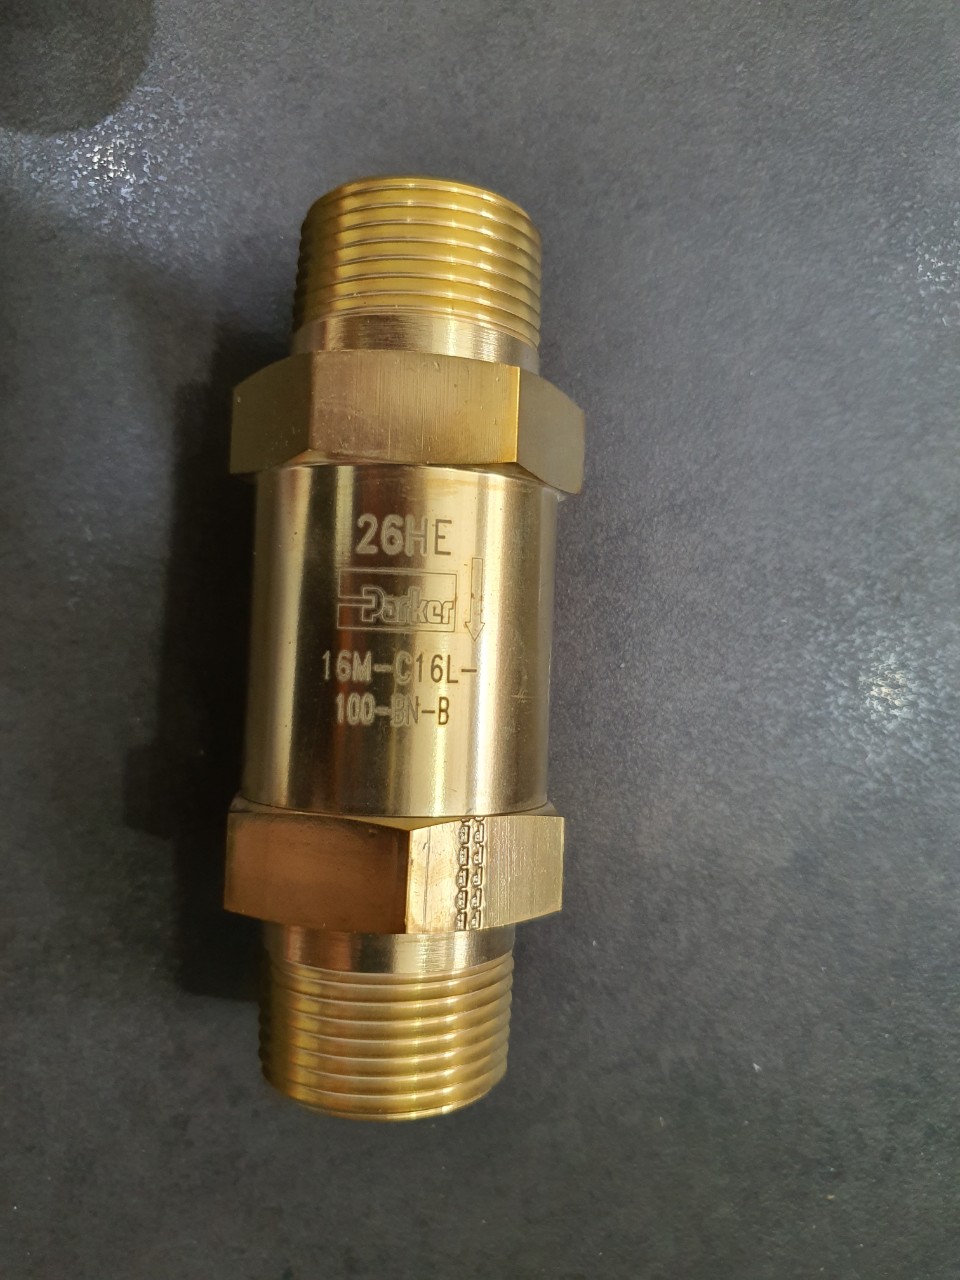 Check valve 16M-C16L-100-BN-B (1)